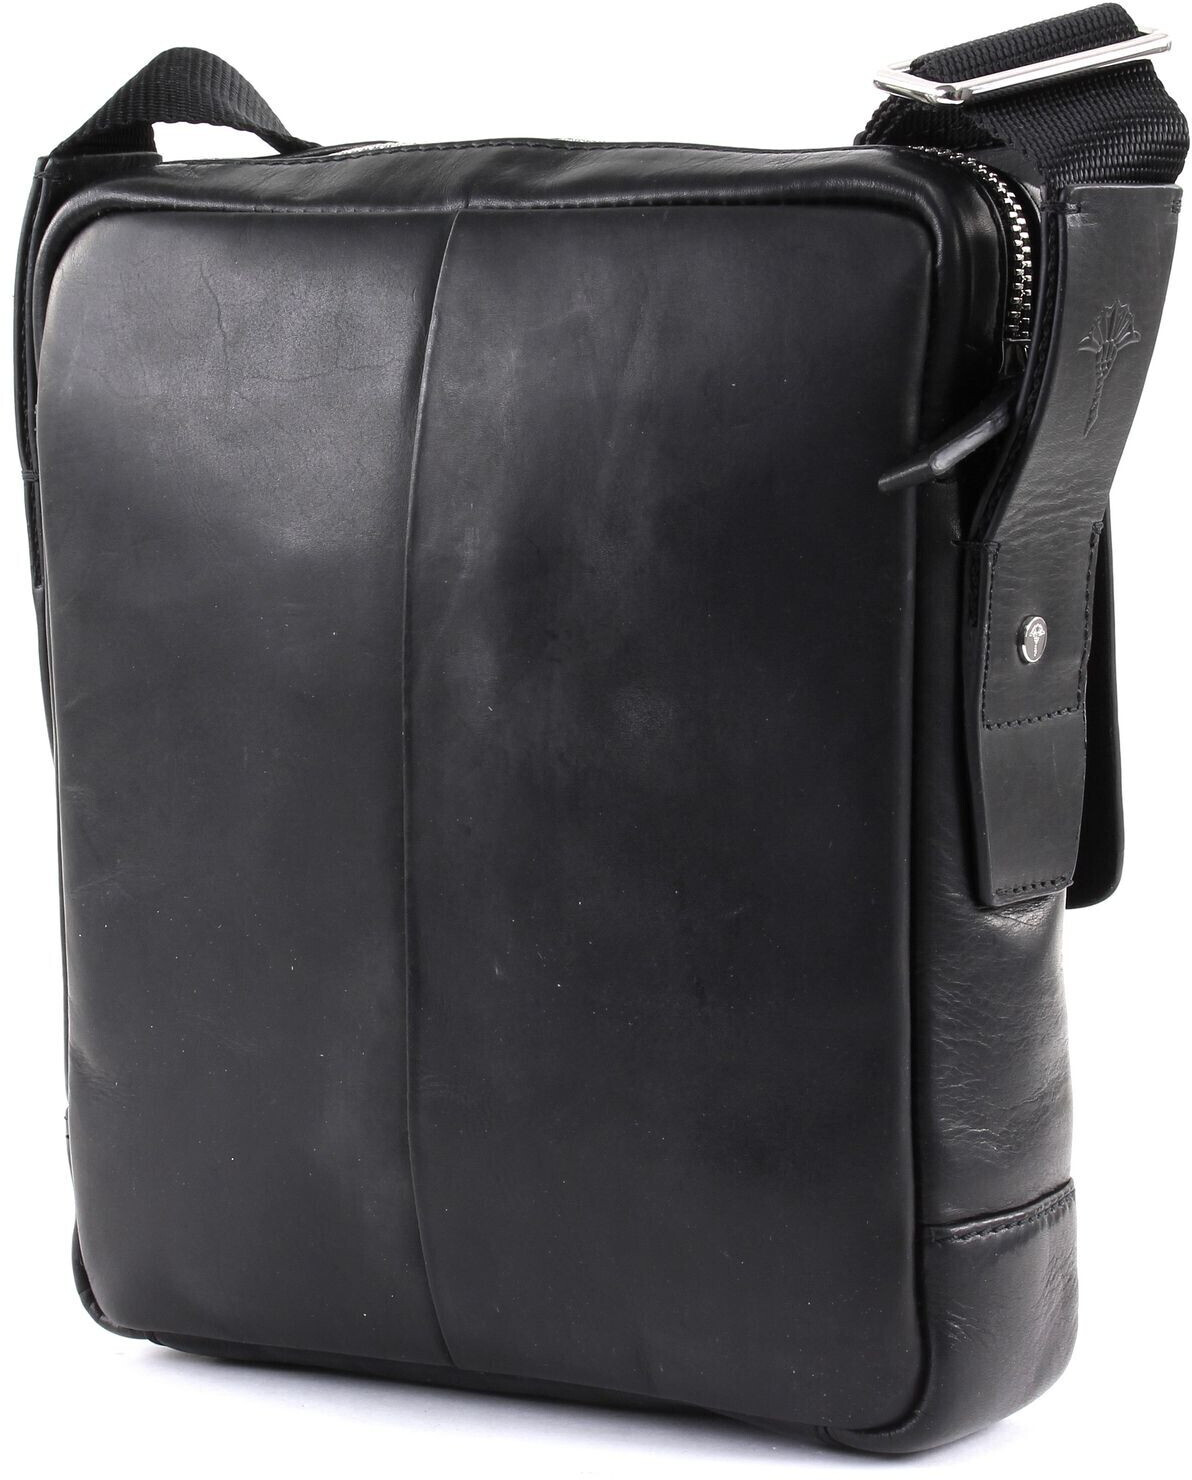 Joop! Loreto Remus Shoulder Bag black ab 113,37 € | Preisvergleich bei